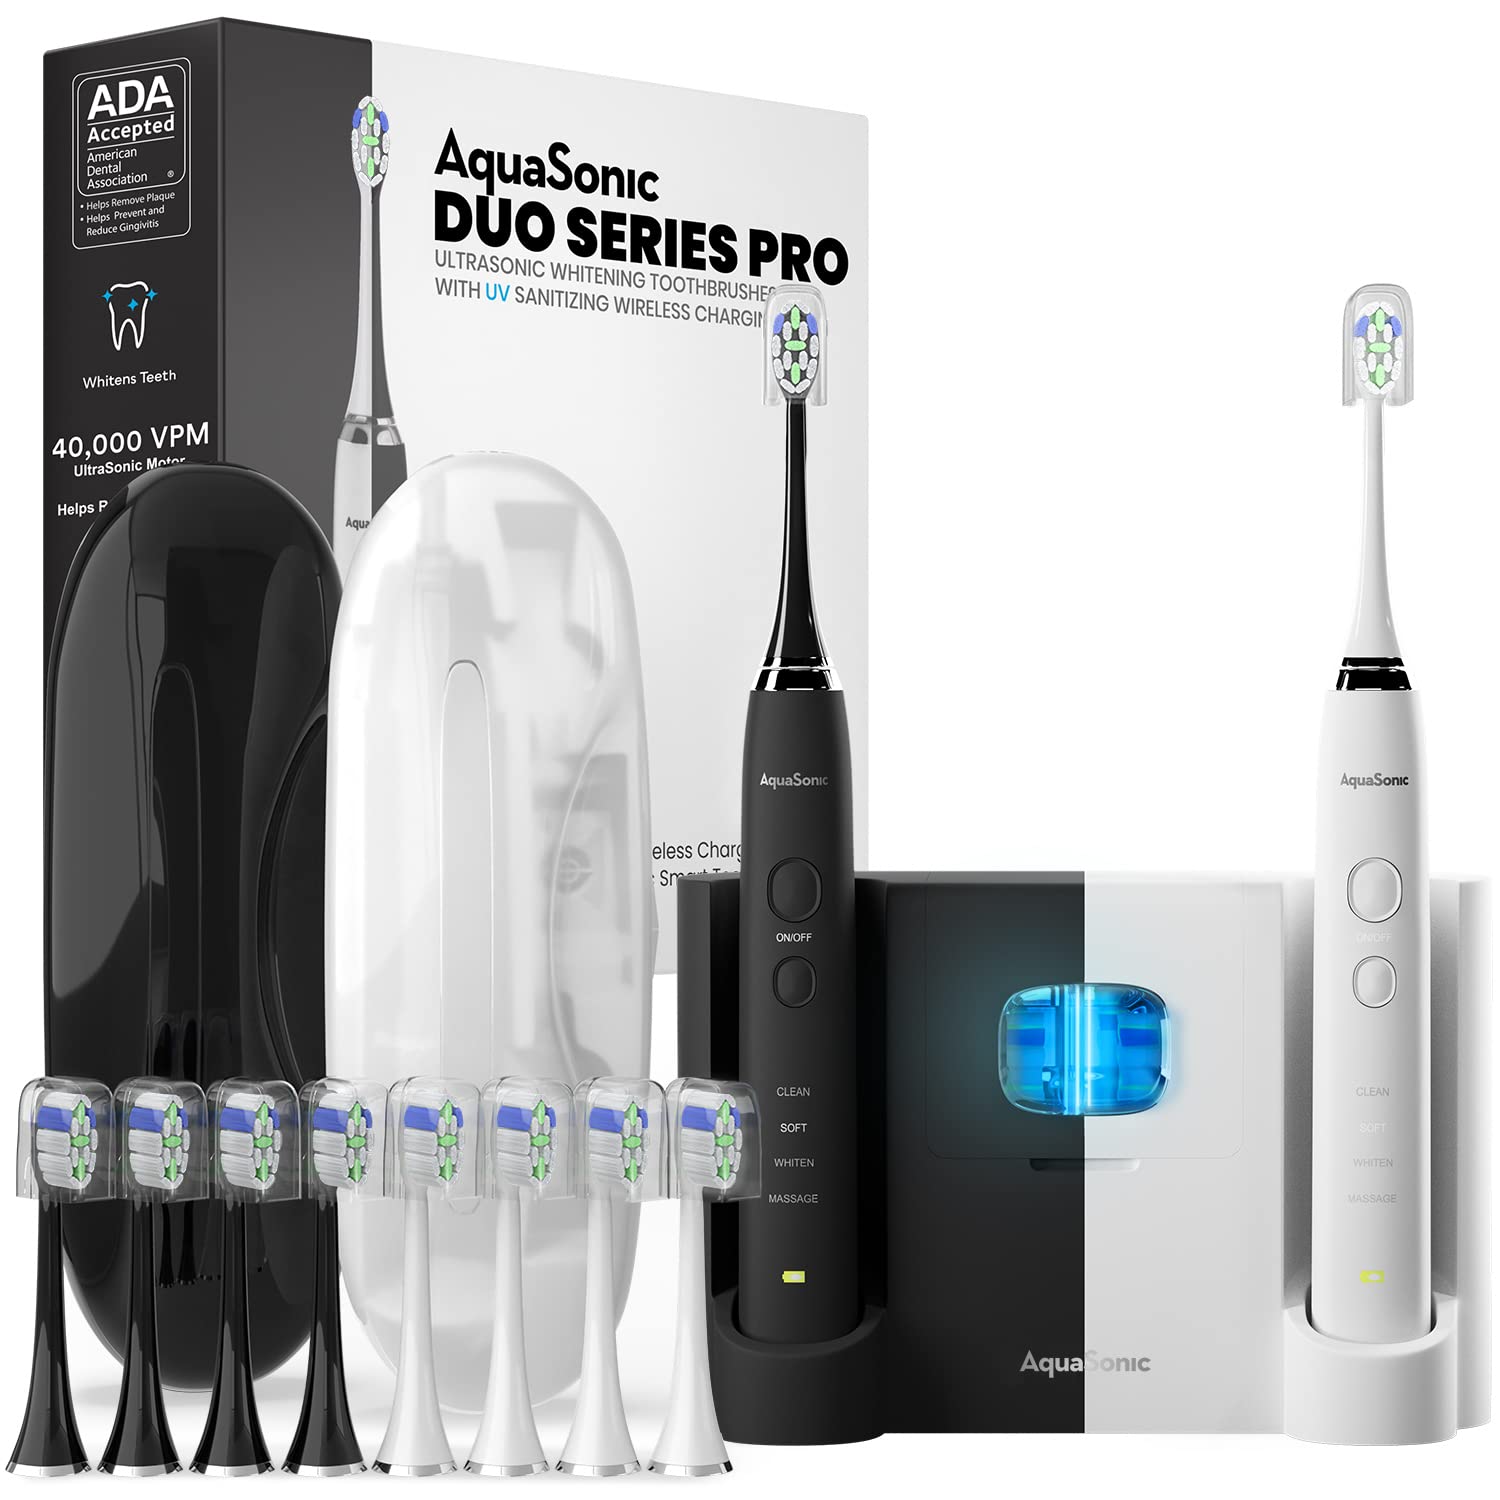 AquaSonic Semi-Automatic ADA-Approved Electric Toothbrush